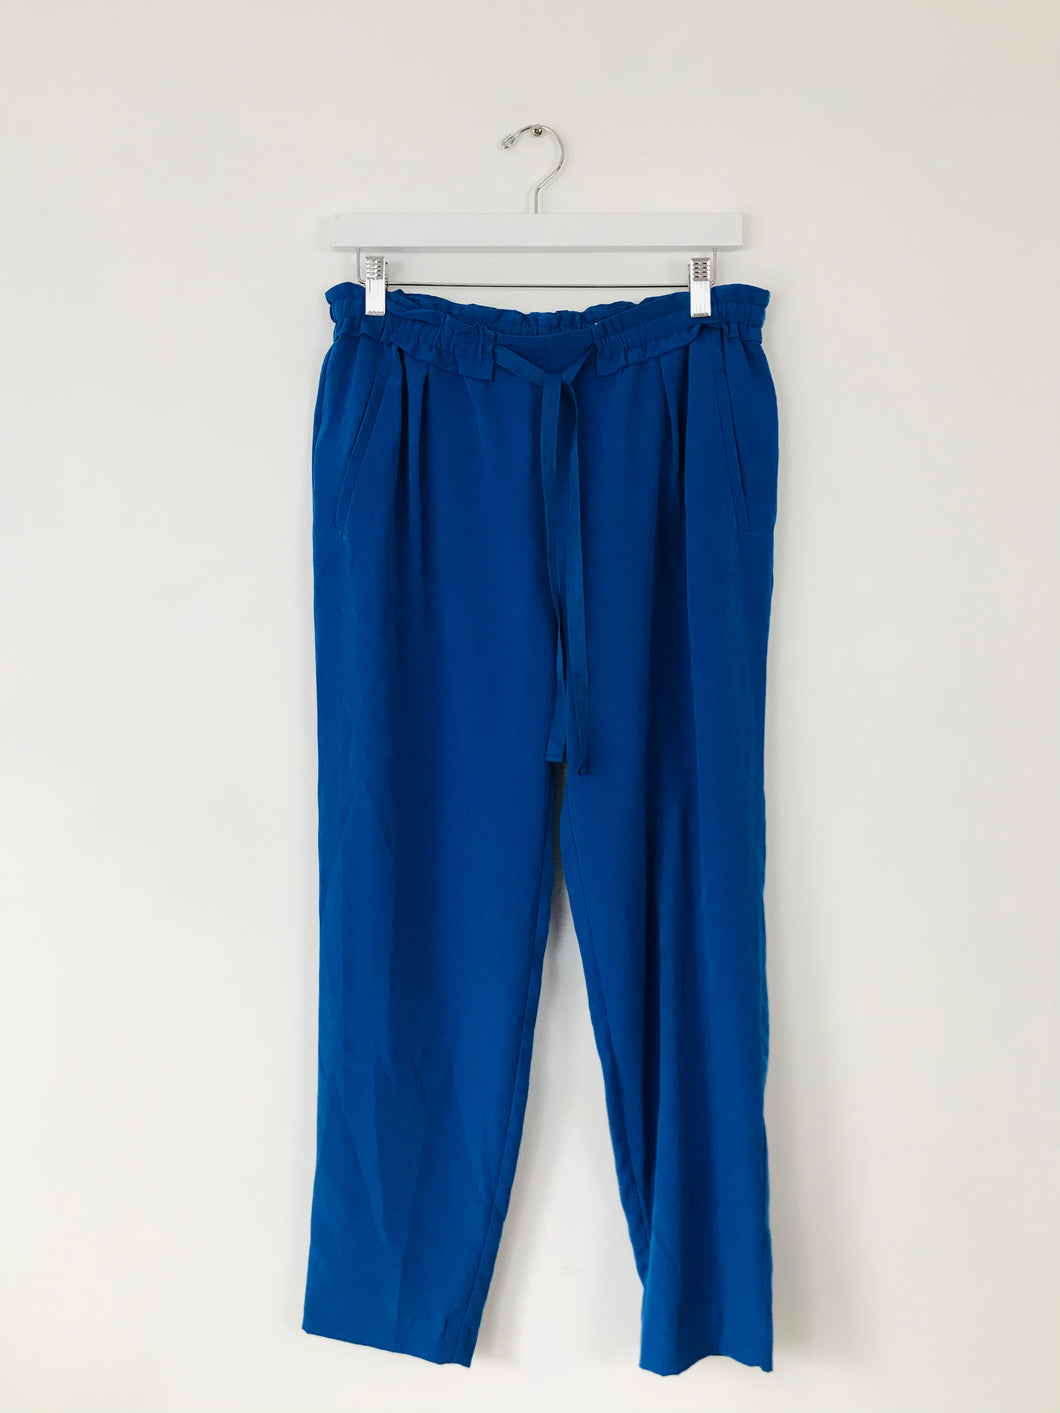 Zara Women’s Elasticated Tie Waist Tapered Trousers | M | Blue